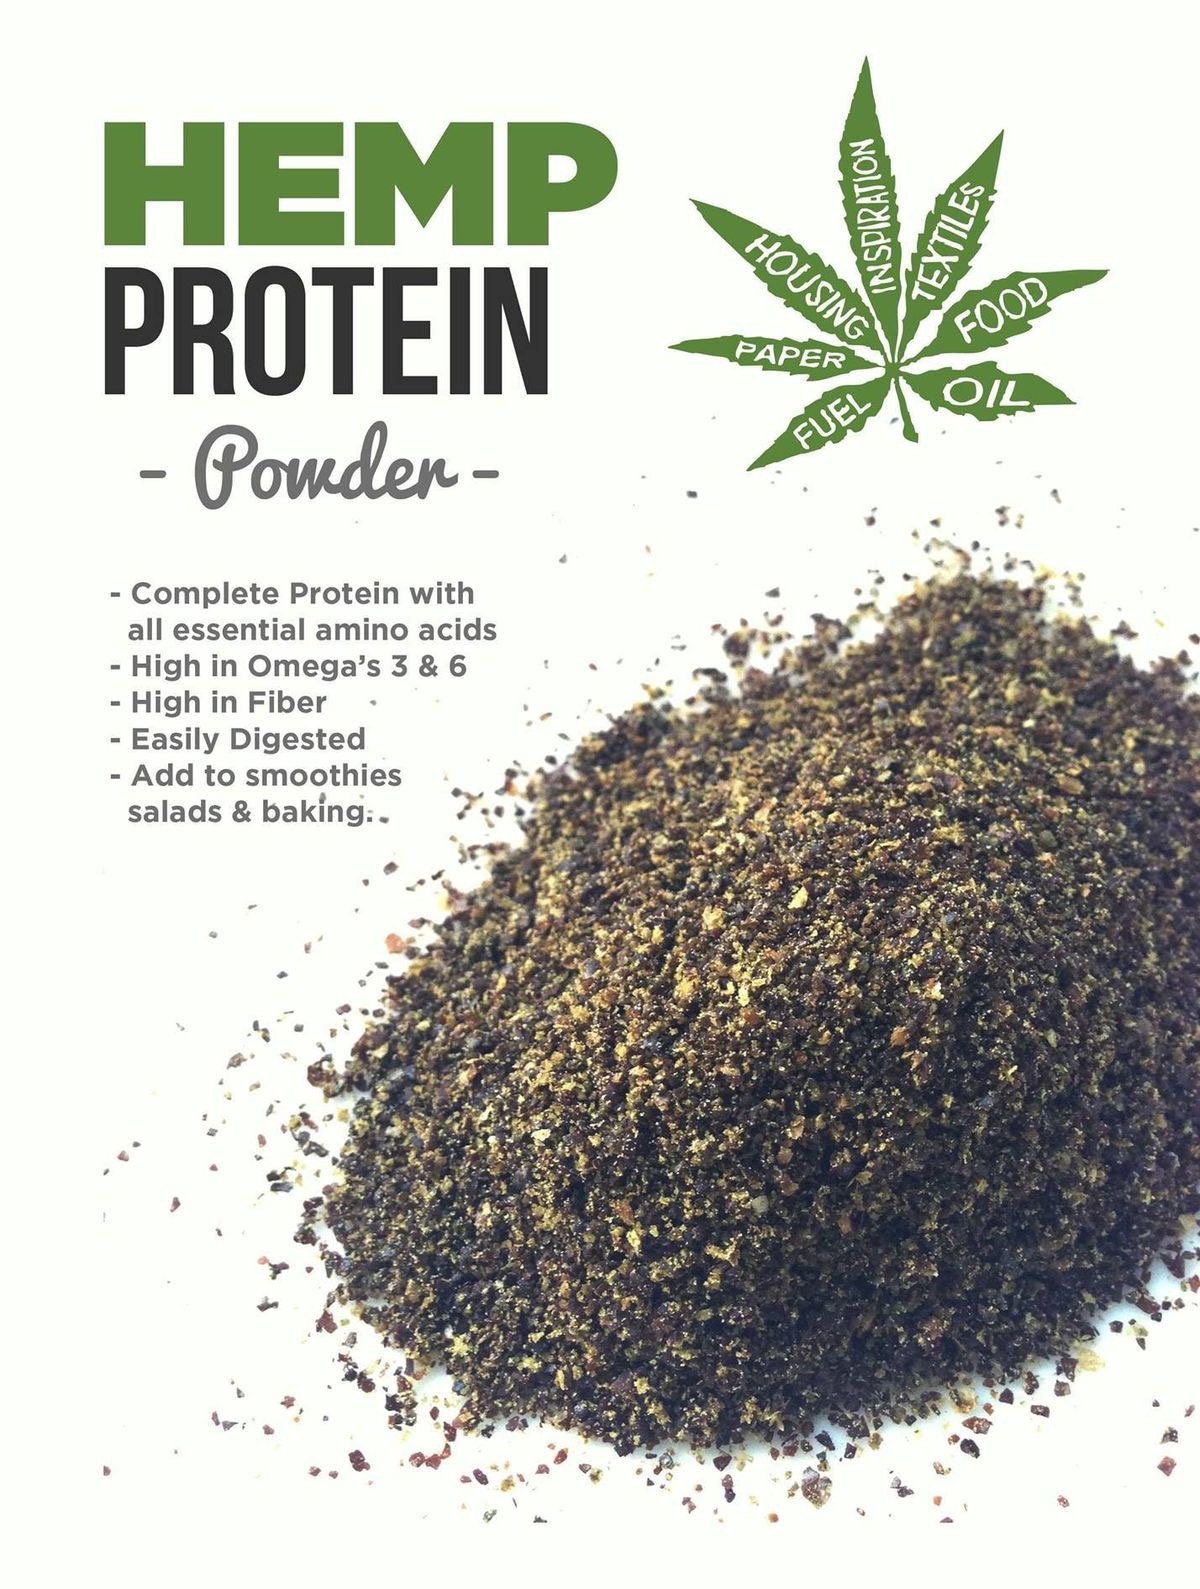 Green Zone. The benefits of hemp protein powder.